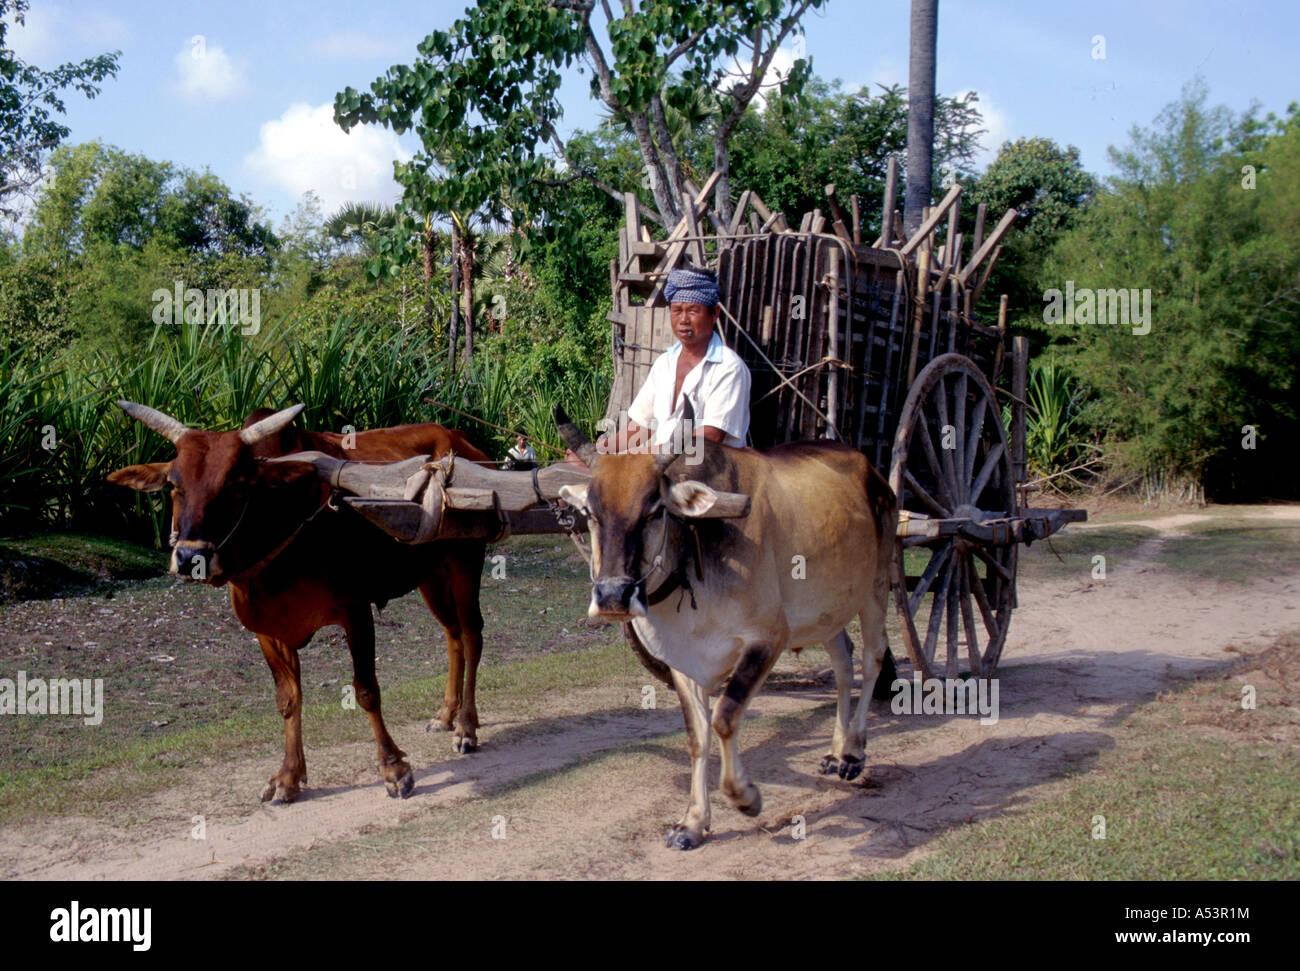 Painet ha1745 3511 Transport Bullock Warenkorb Svay Rieng Kambodscha Land Entwicklungsland, was weniger ökonomisch entwickelt Stockfoto